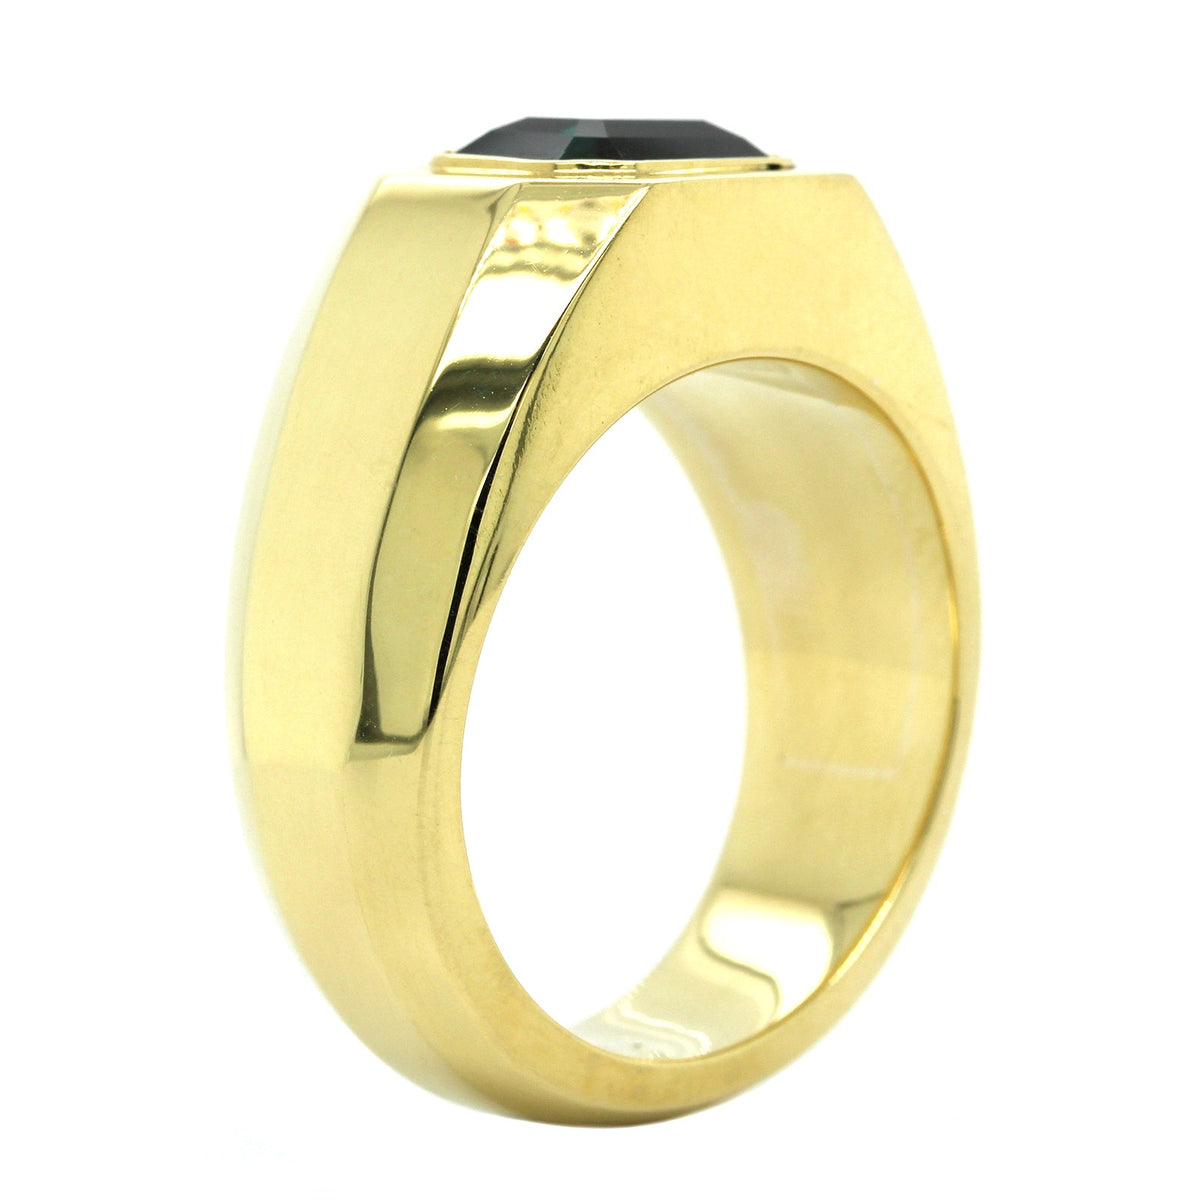 18K Yellow Gold Bezel Set Emerald Cut Teal Sapphire Ring, 18k yellow gold, Long's Jewelers